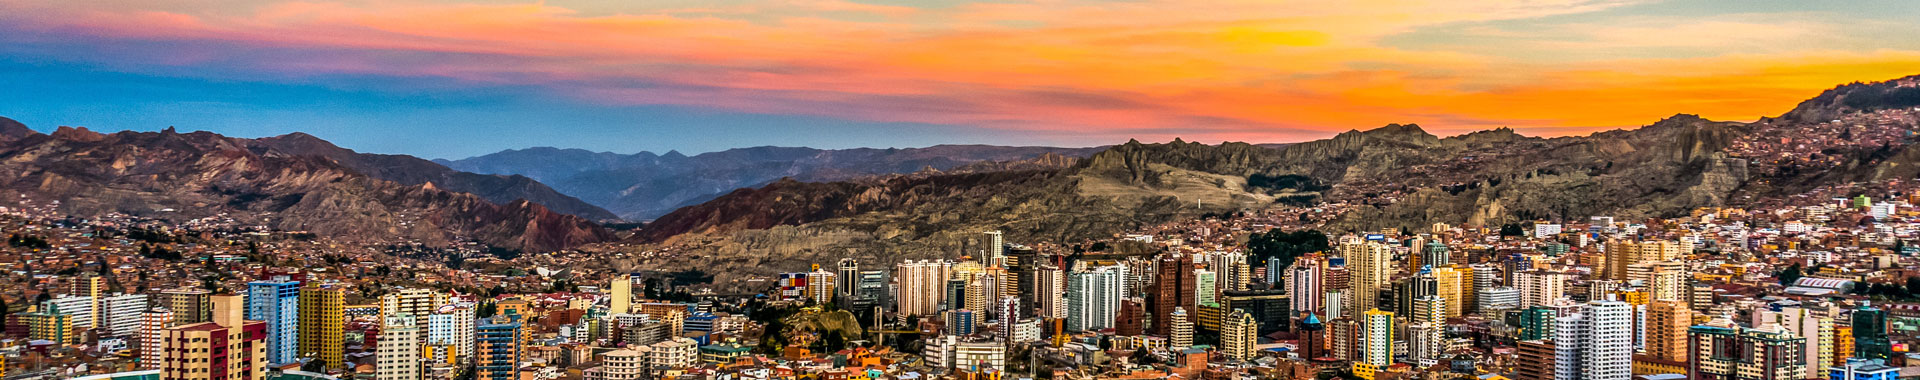 Bolivia - La Paz - Paquetes - City